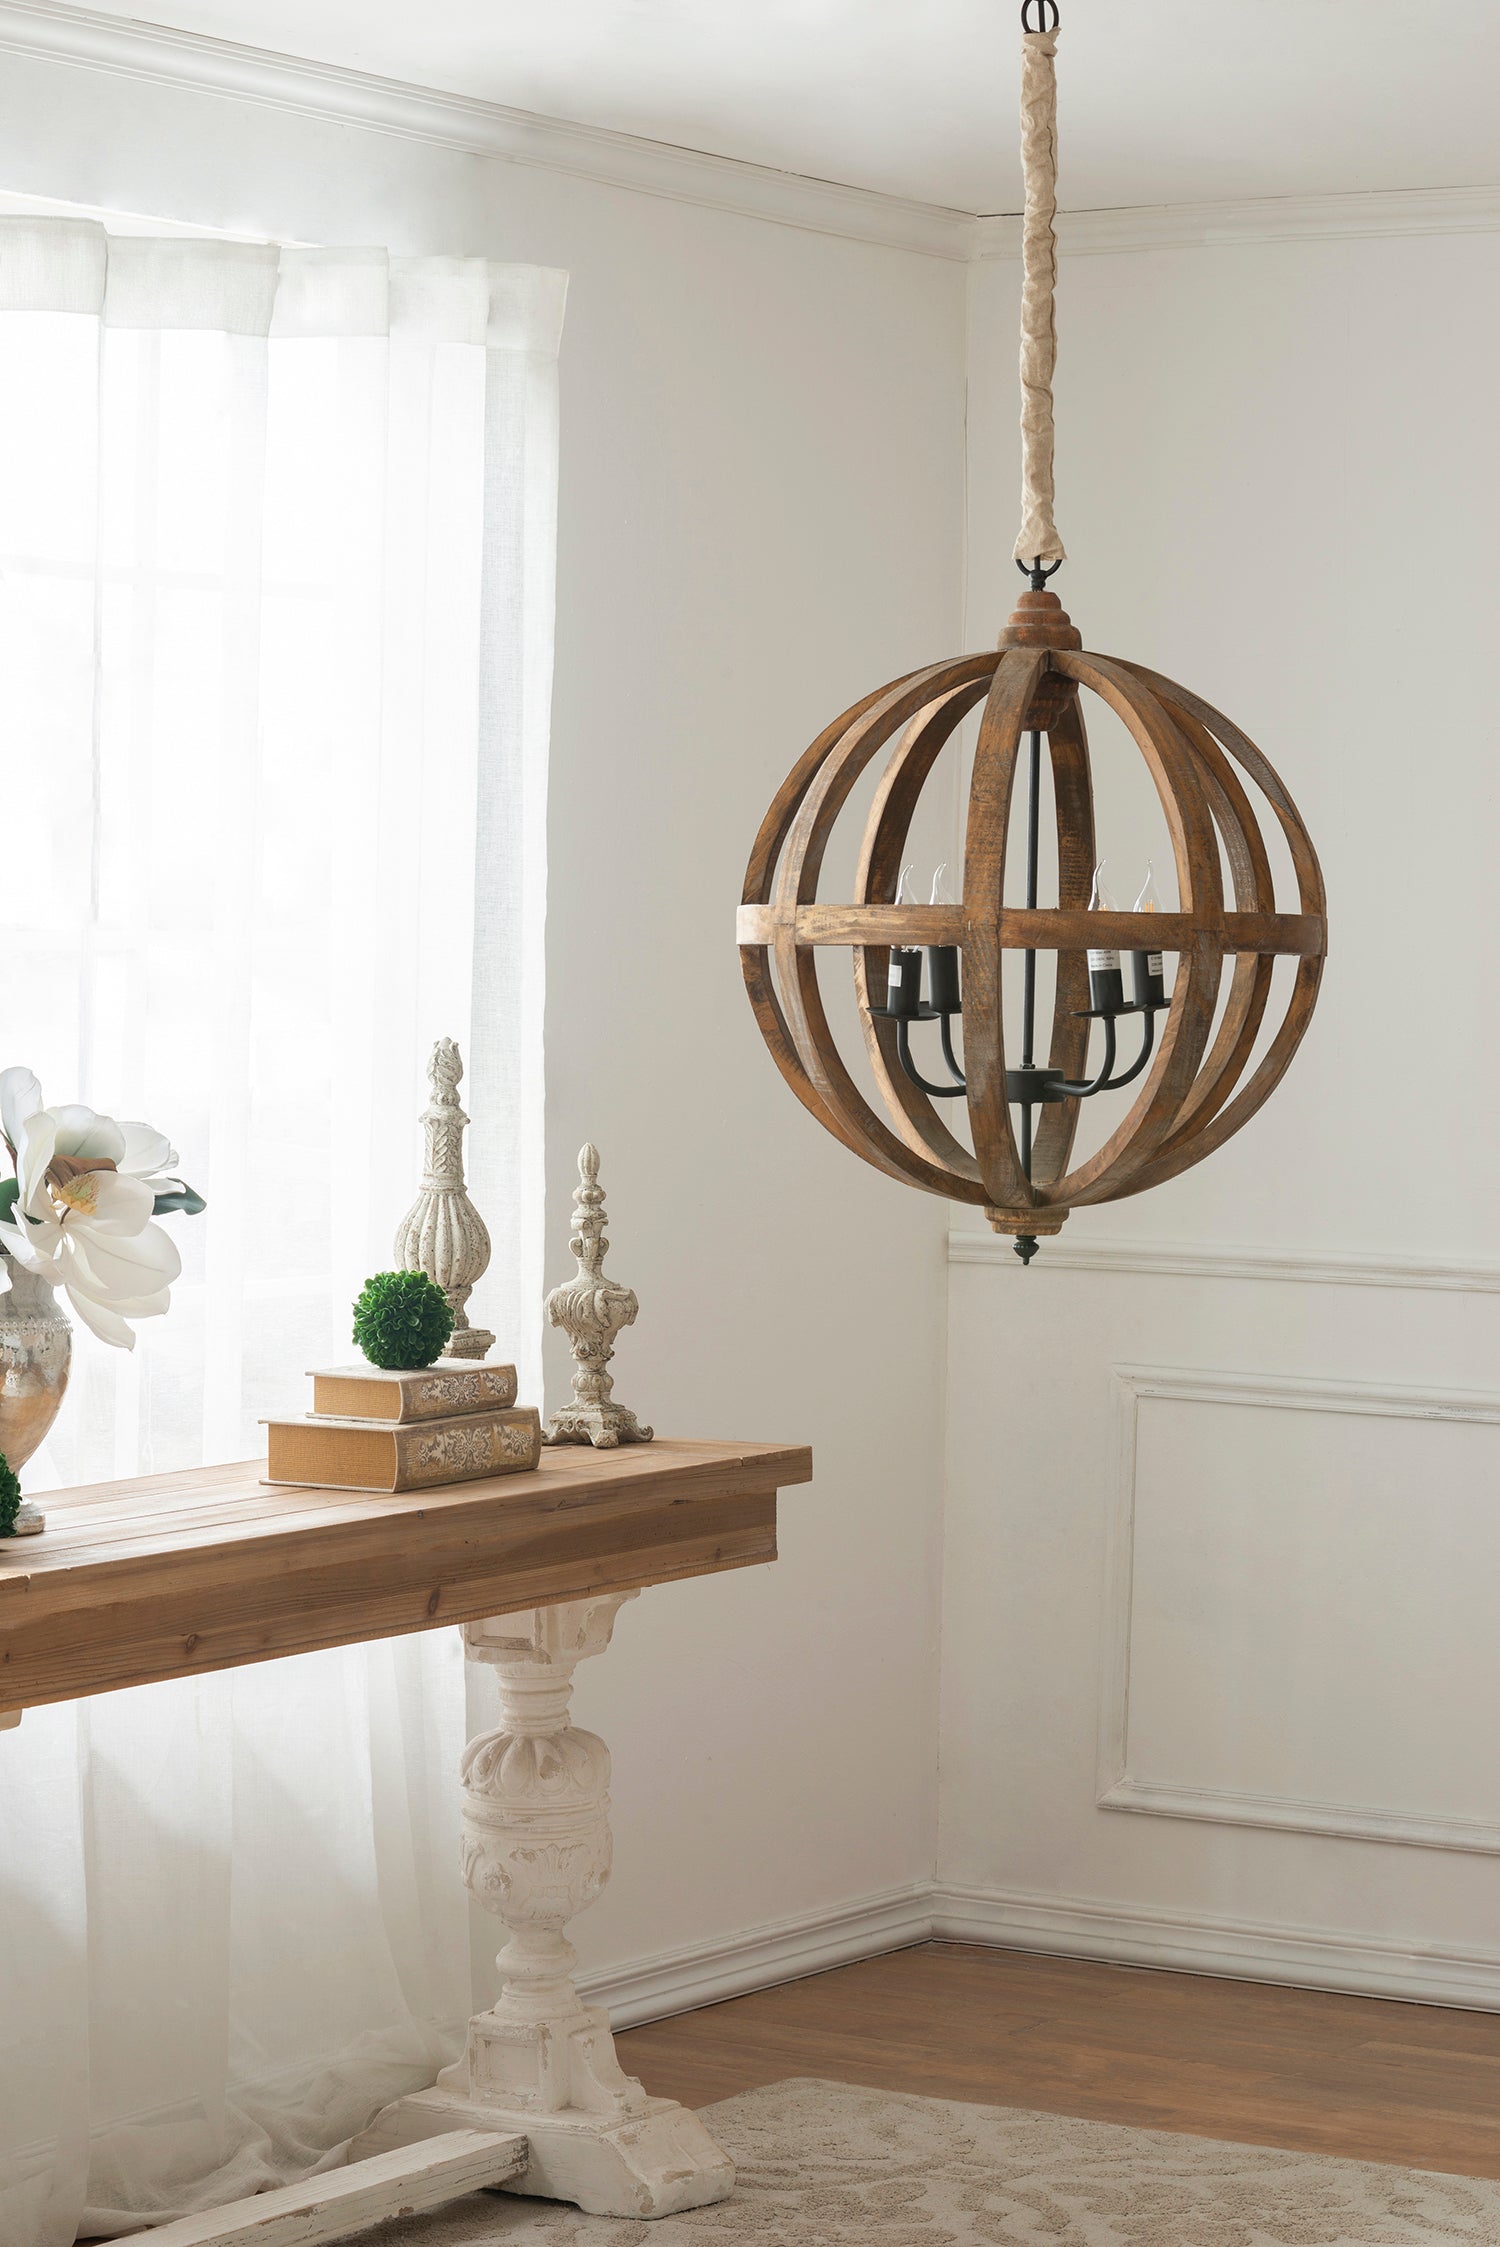 4 Light Wood Chandelier, Hanging Light Fixture with brown-wood